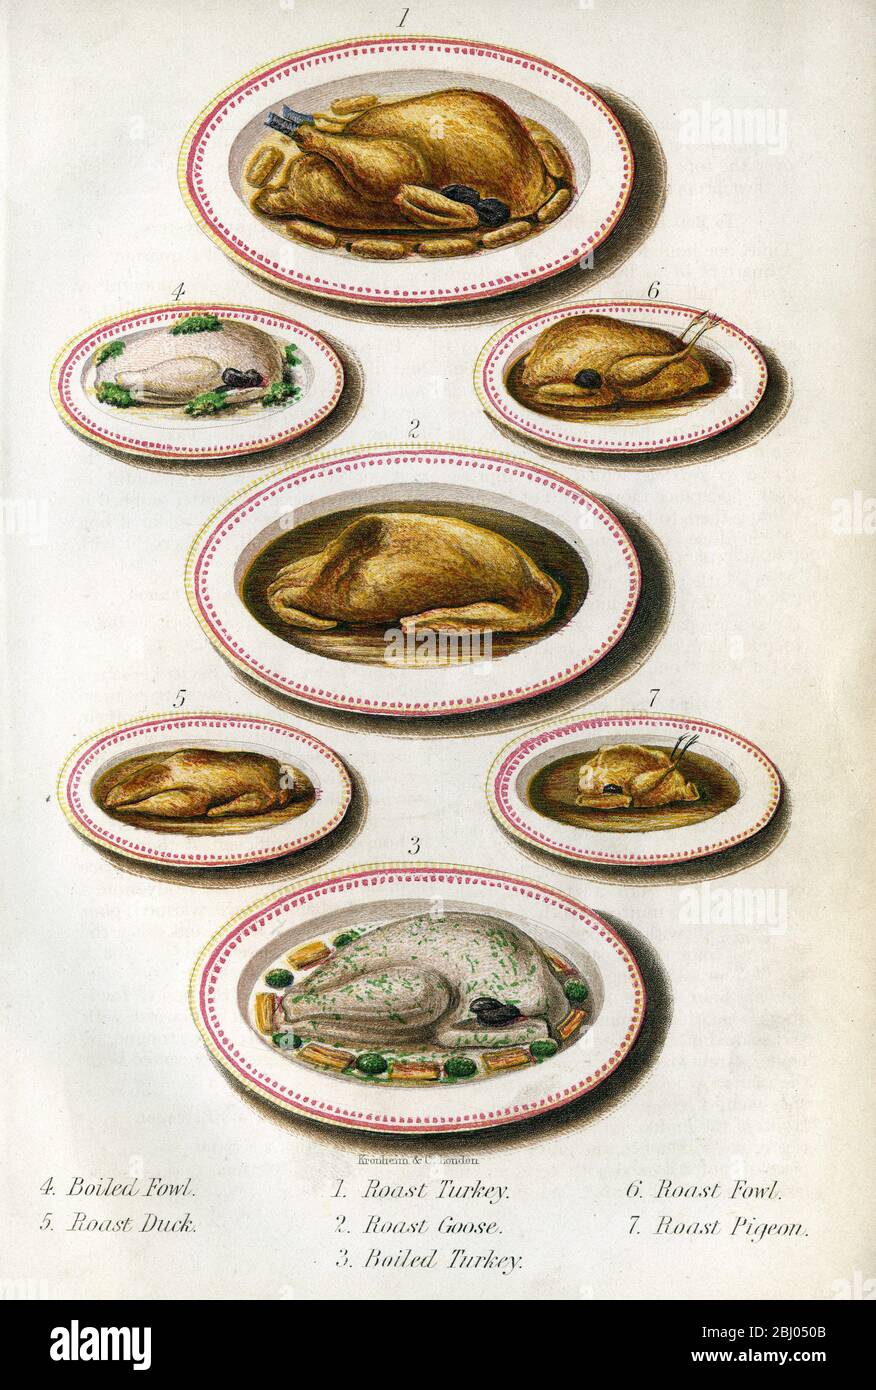 Kronheim & Co. London Various Poultry Dishes: - 1.Roast Turkey - 2. Roast Goose - 3. Boiled Turkey - 4. Boiled Fowl - 5. Roat Duck - 6. Roast Fowl - 7. Roat Pigeon Stock Photo